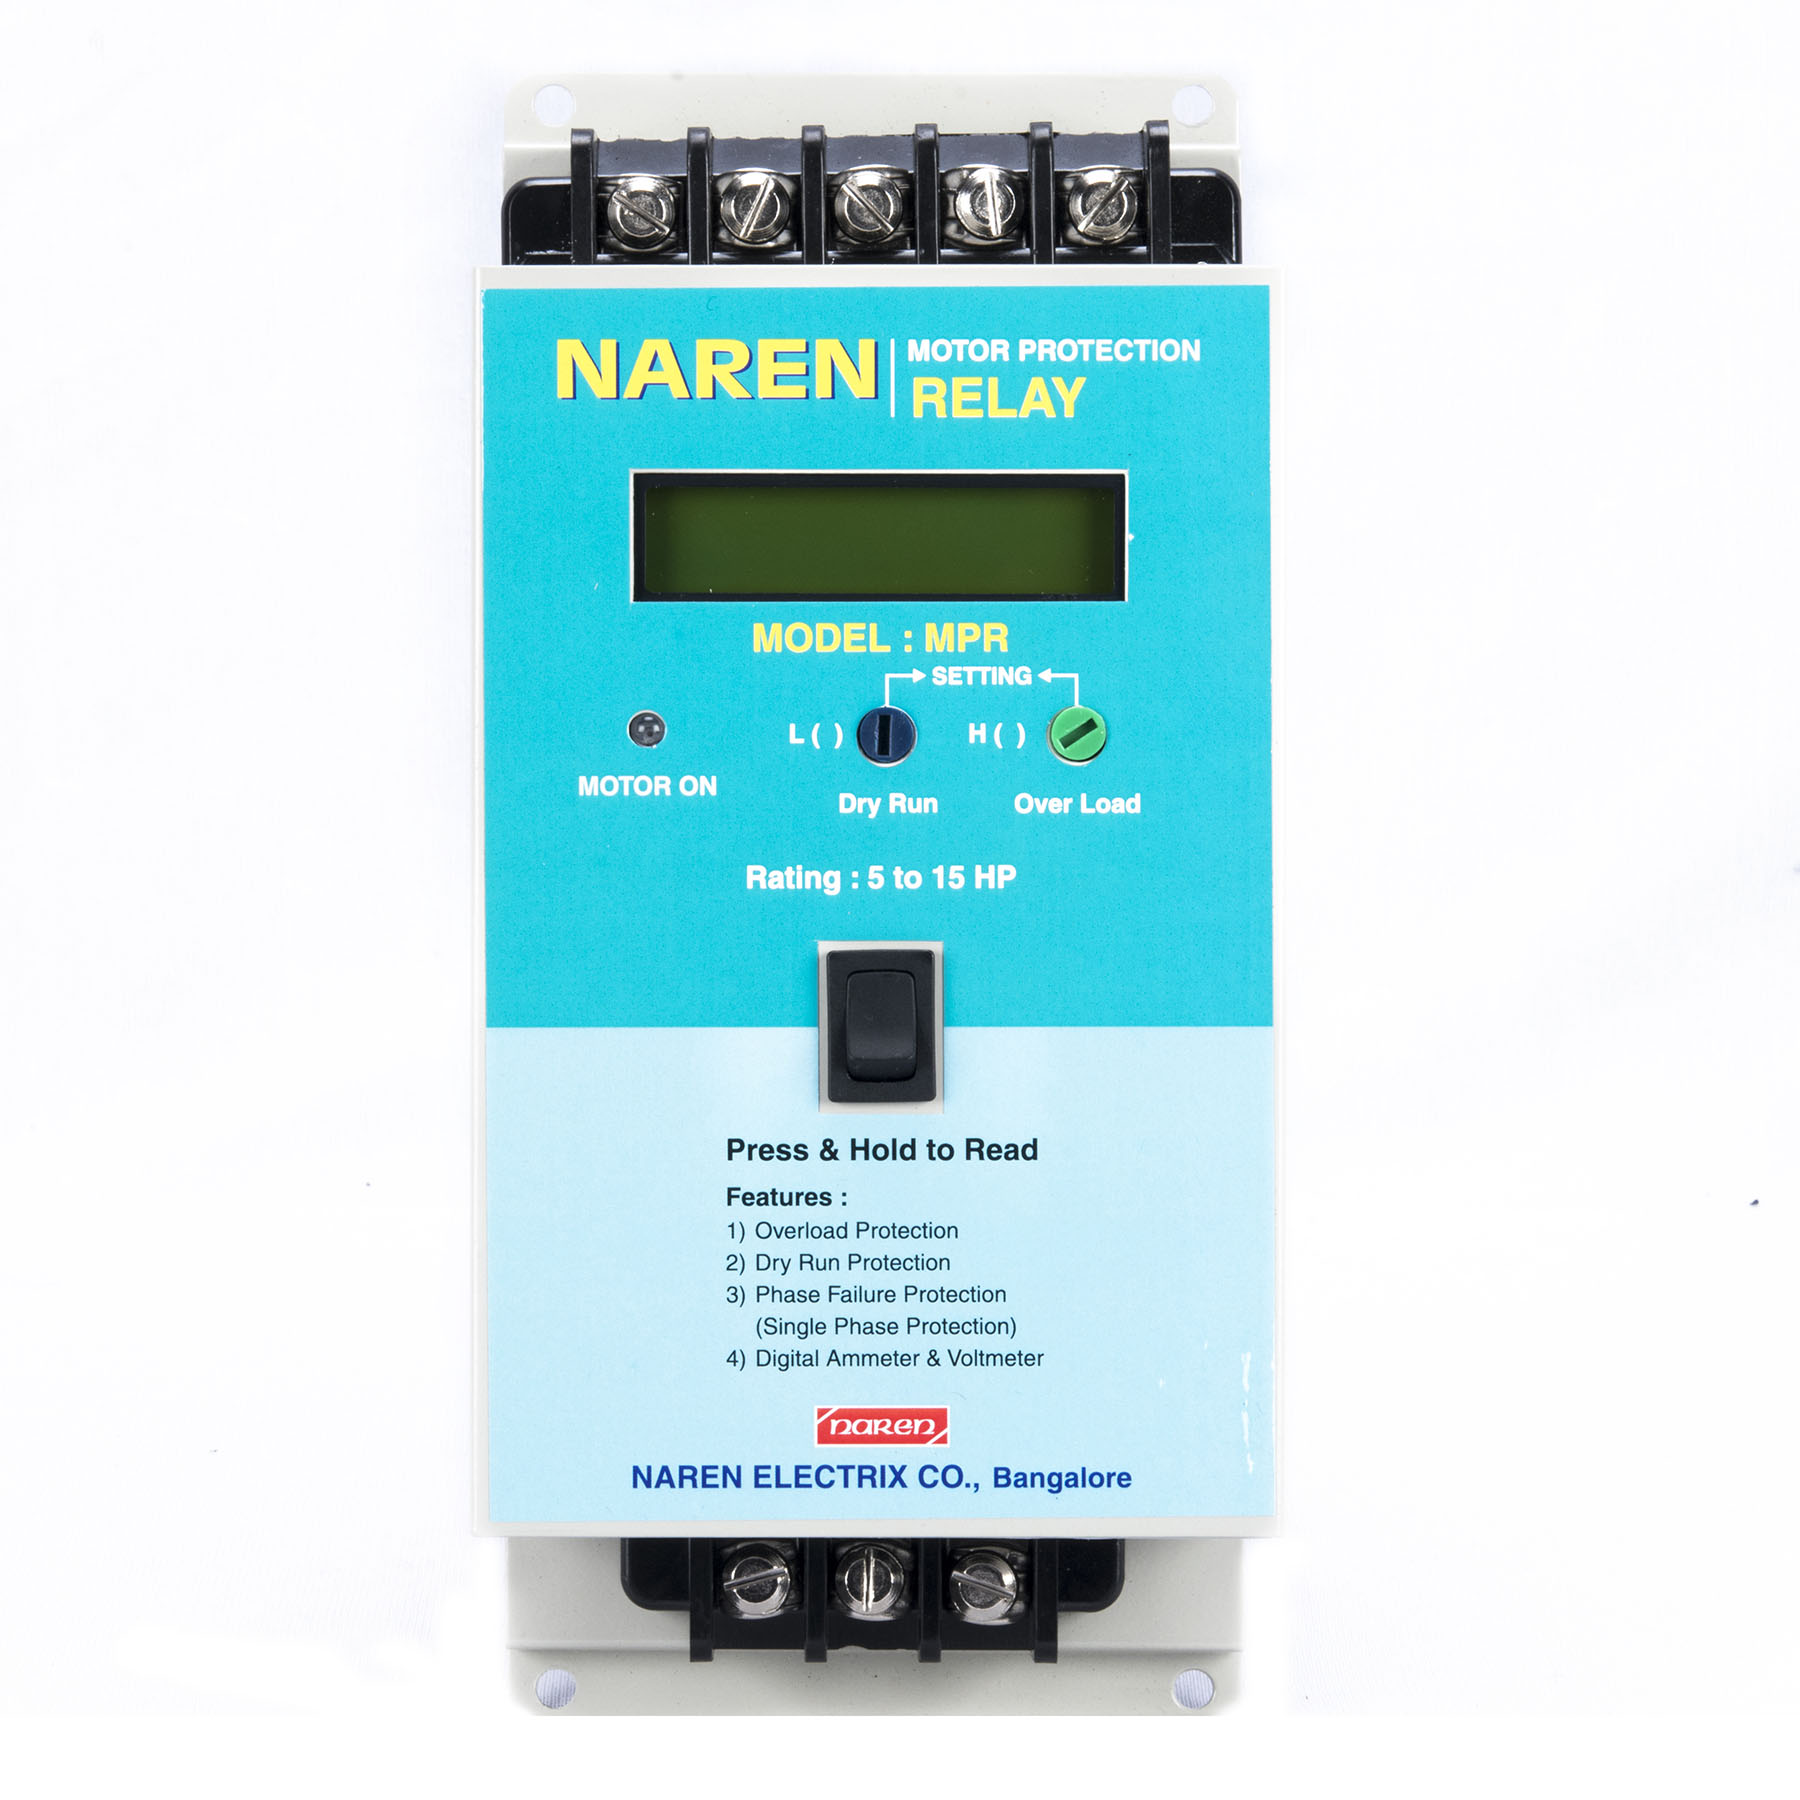 Naren - Motor Protection Relay Model - MPR